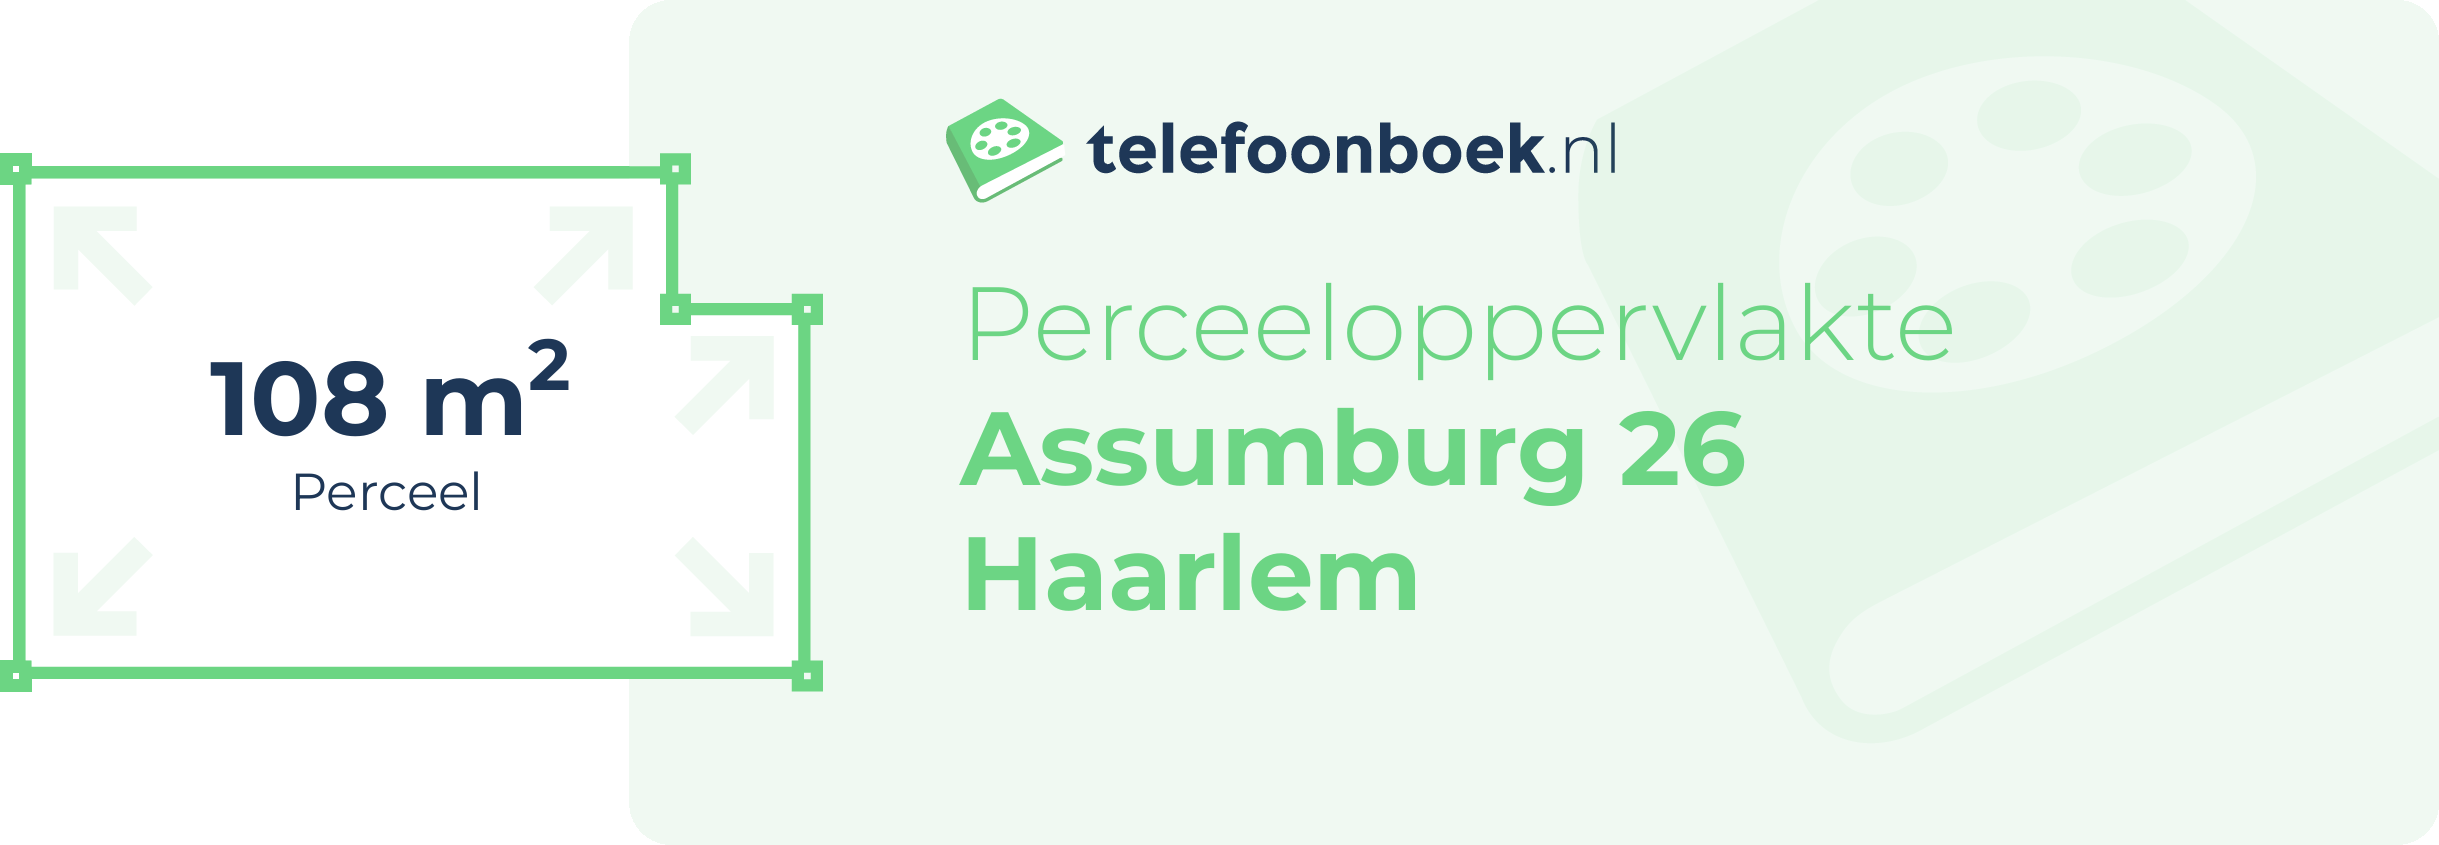 Perceeloppervlakte Assumburg 26 Haarlem